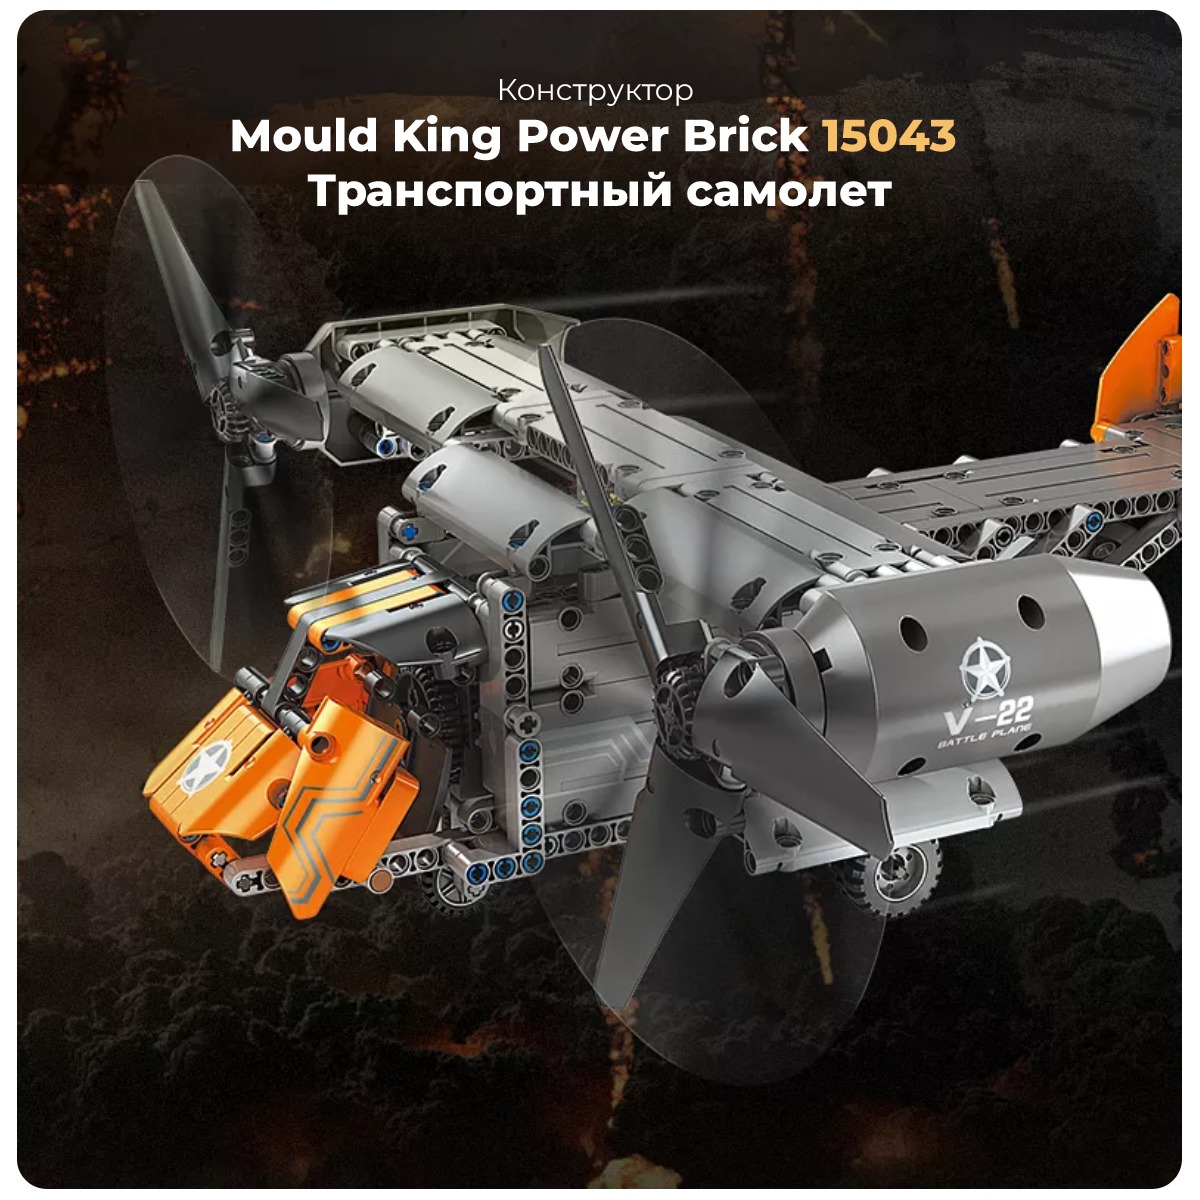 Mould-King-Power-Brick-15043-01